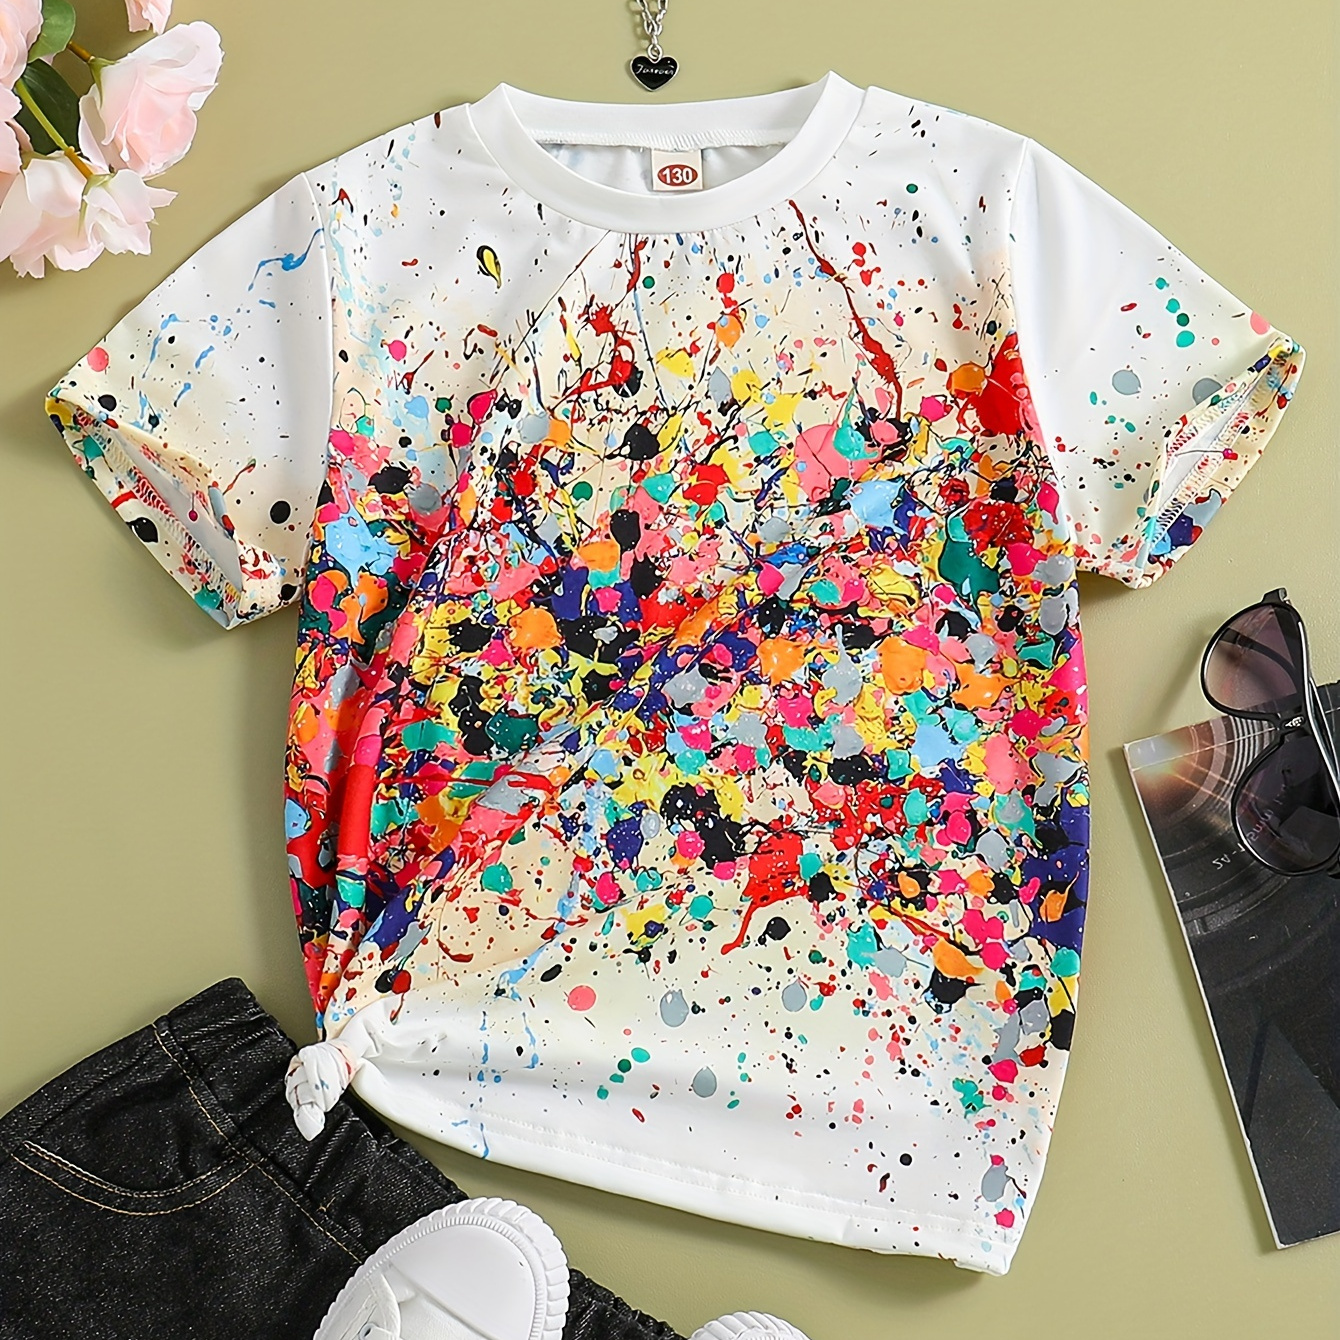 

Girls Casual Rainbow Graffiti Print Crew Neck Short Sleeve T-shirt Tops Comfy Tees For Summer Outdoor Gift